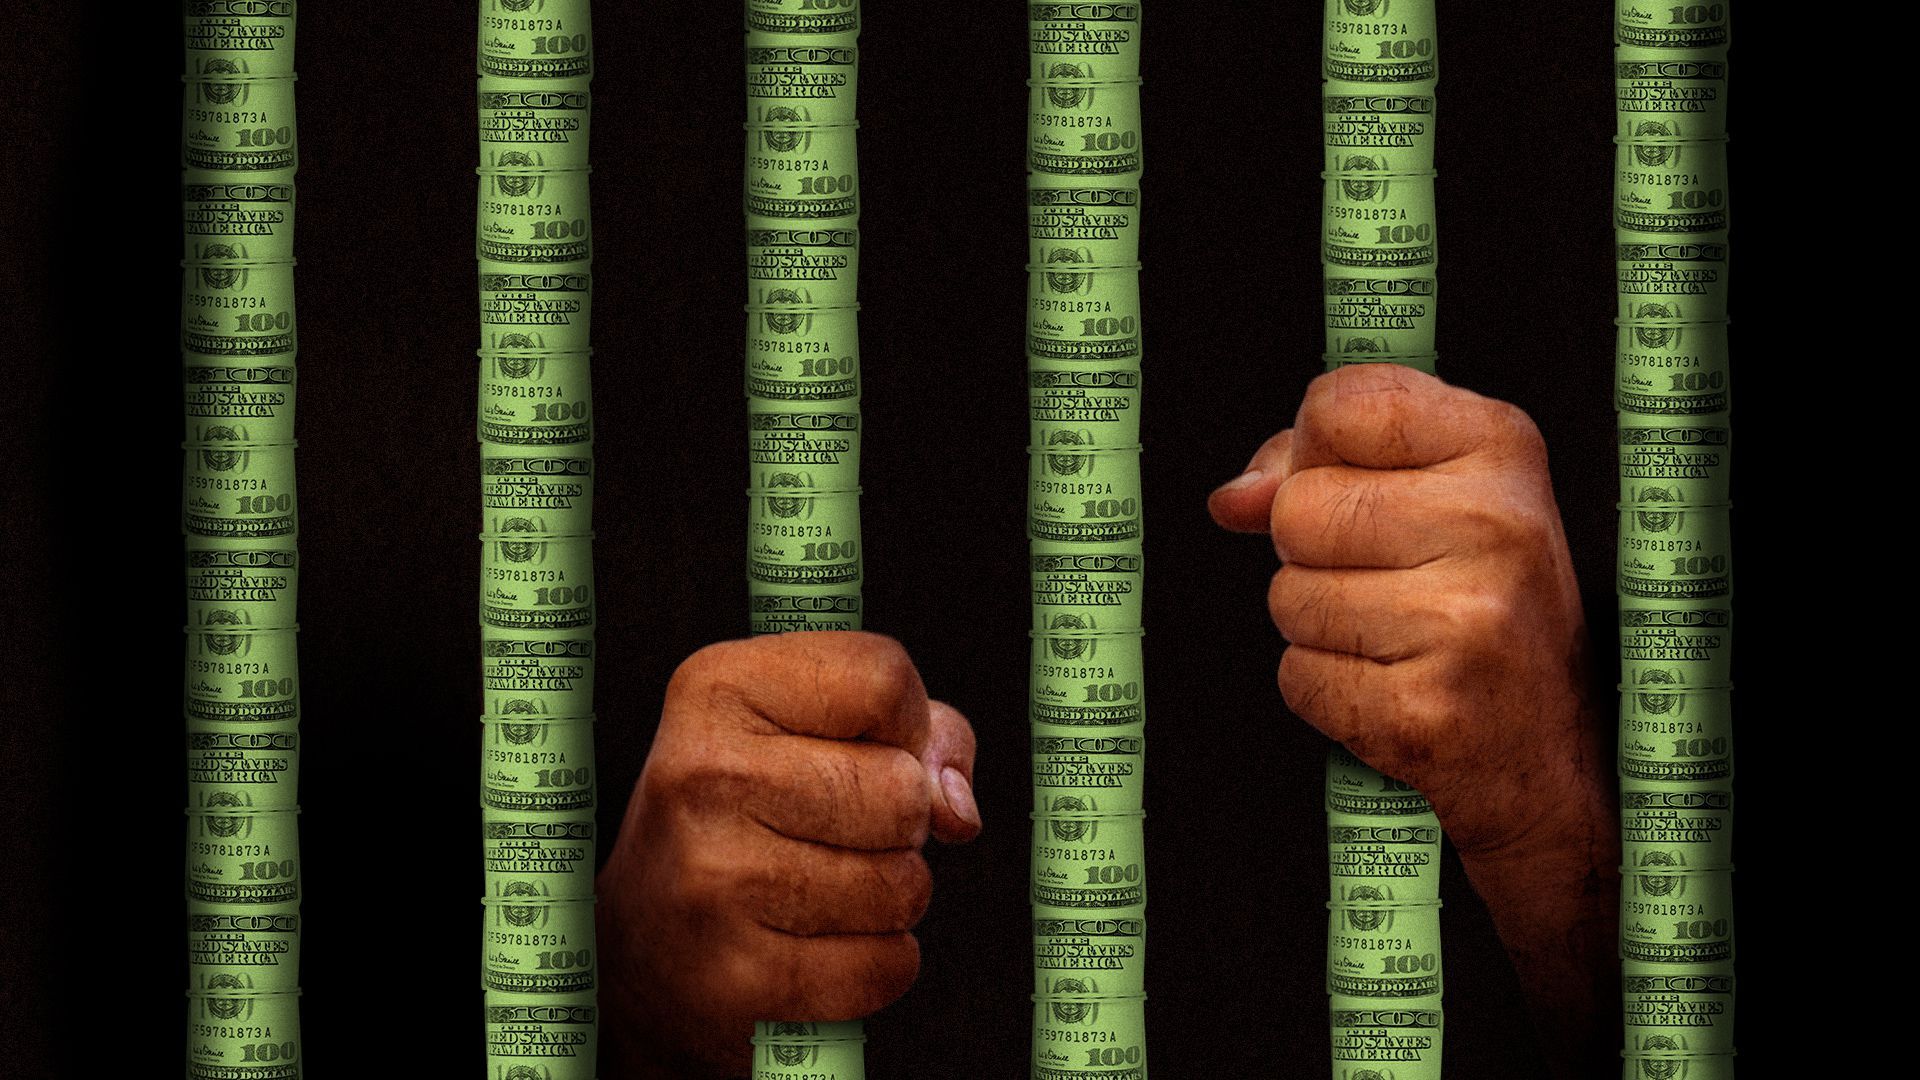 Hands around prison bars made of money